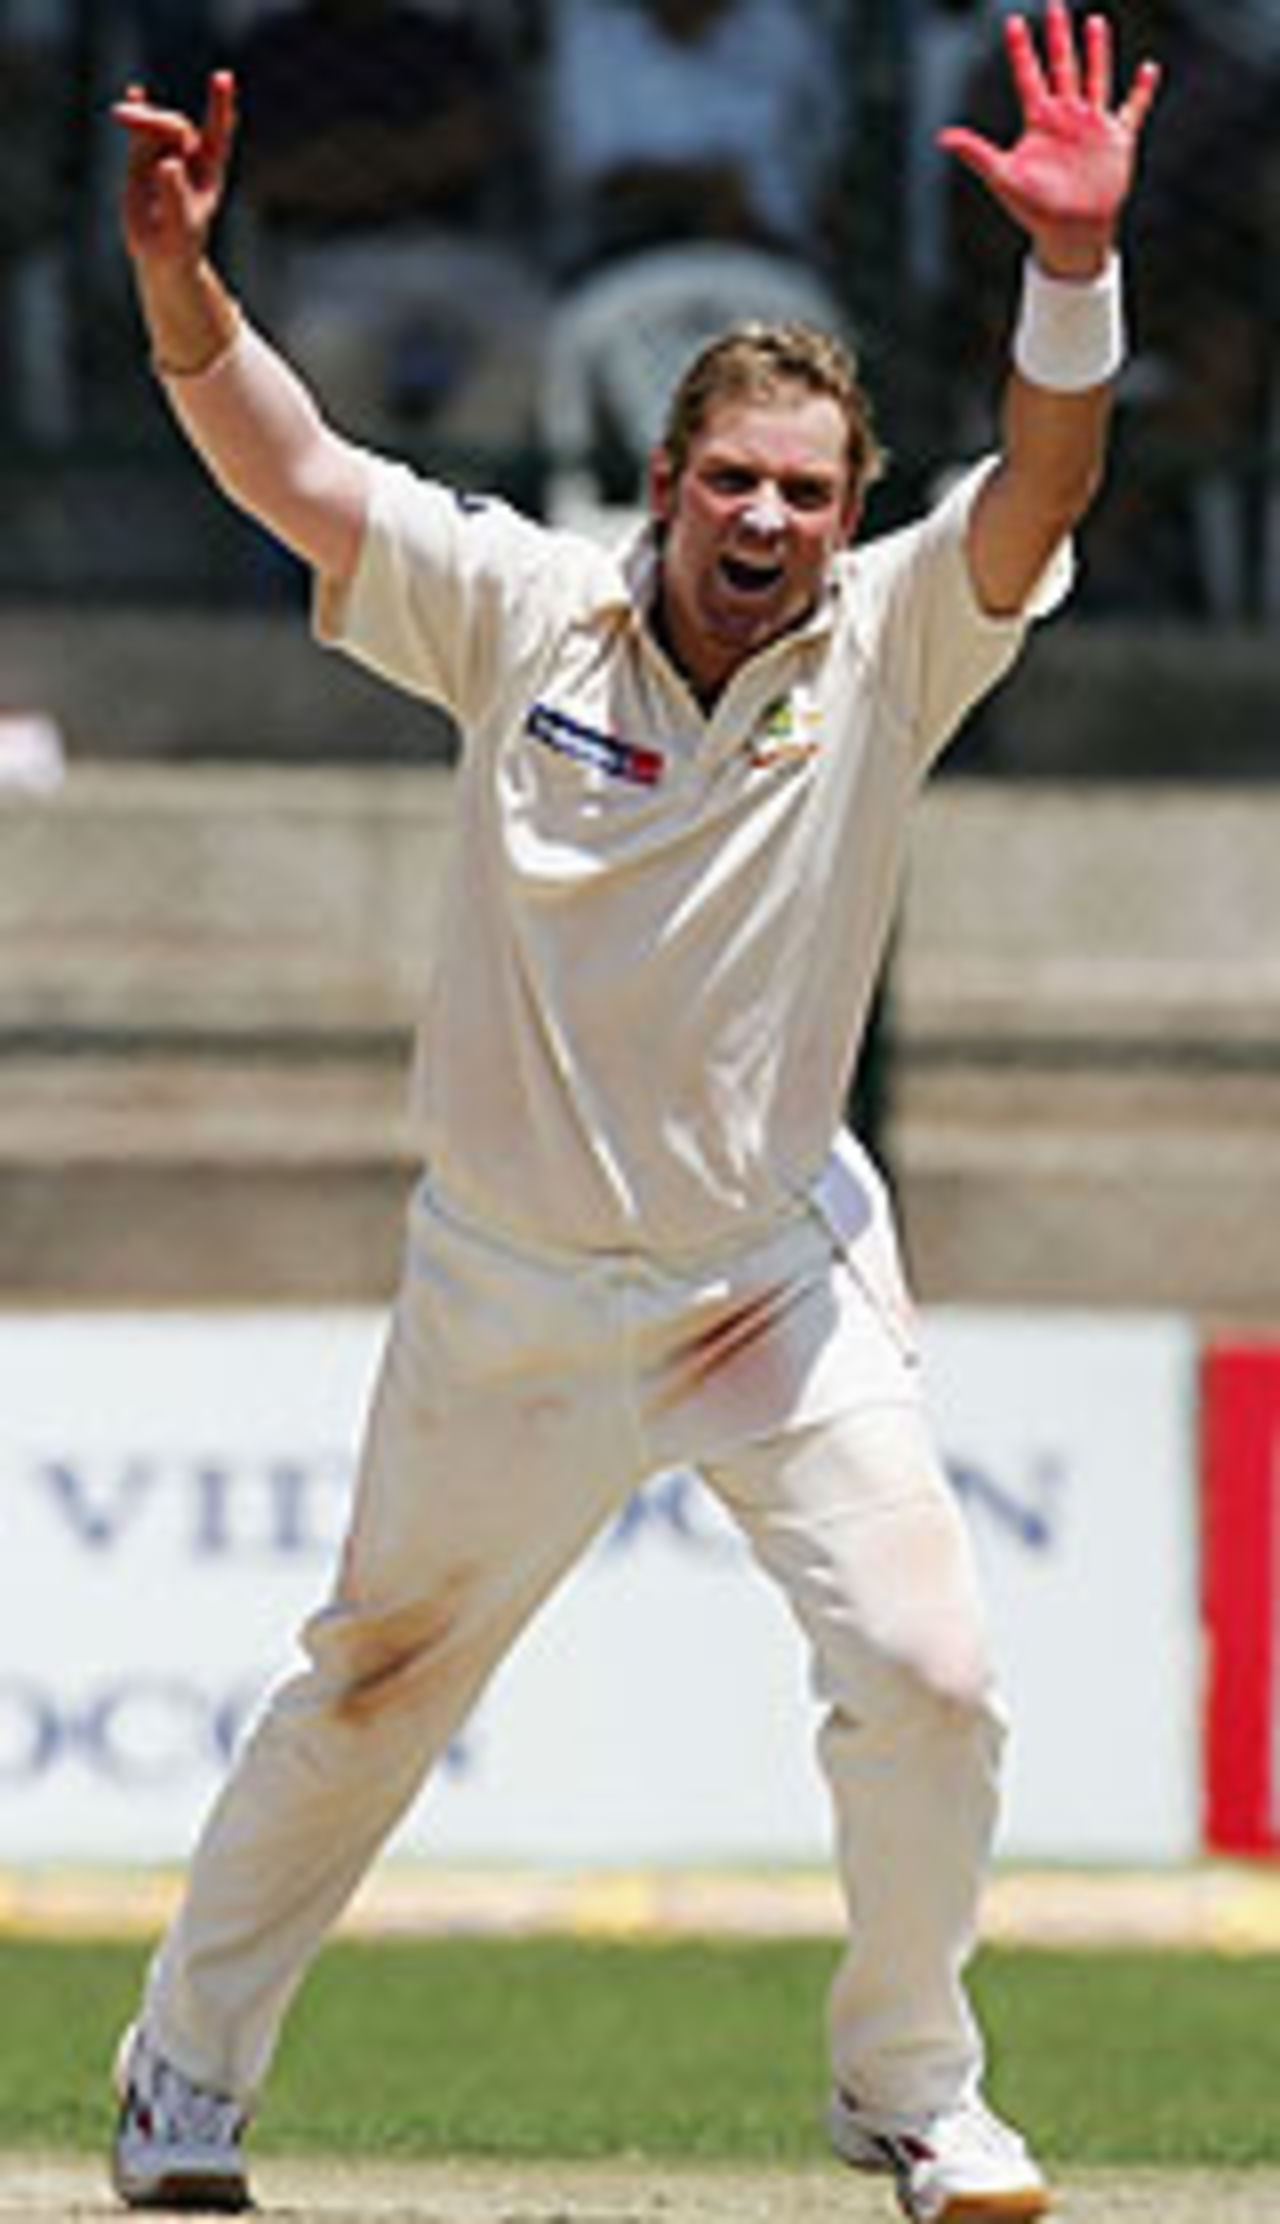 Shane Warne celebrates his second wicket, India v Australia, 1st Test, Bangalore, 3rd day, October 8, 2004